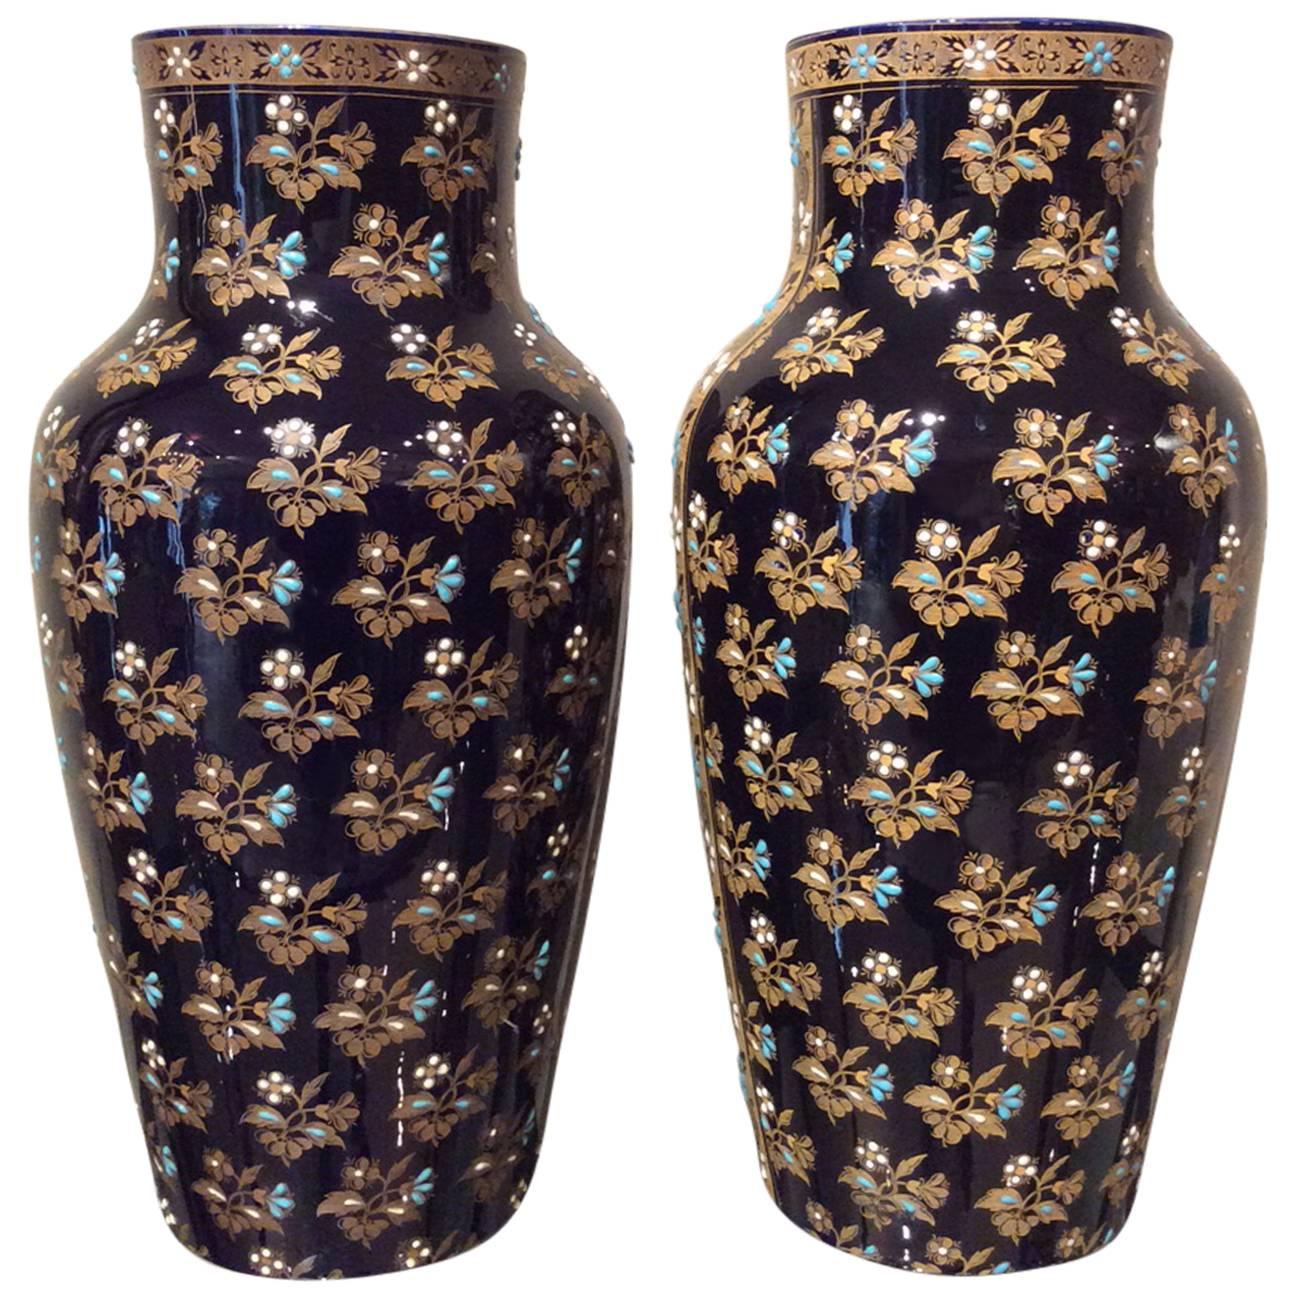 Pair of Gien Porcelain Vases with Floral Enamel Decor, 19th Century